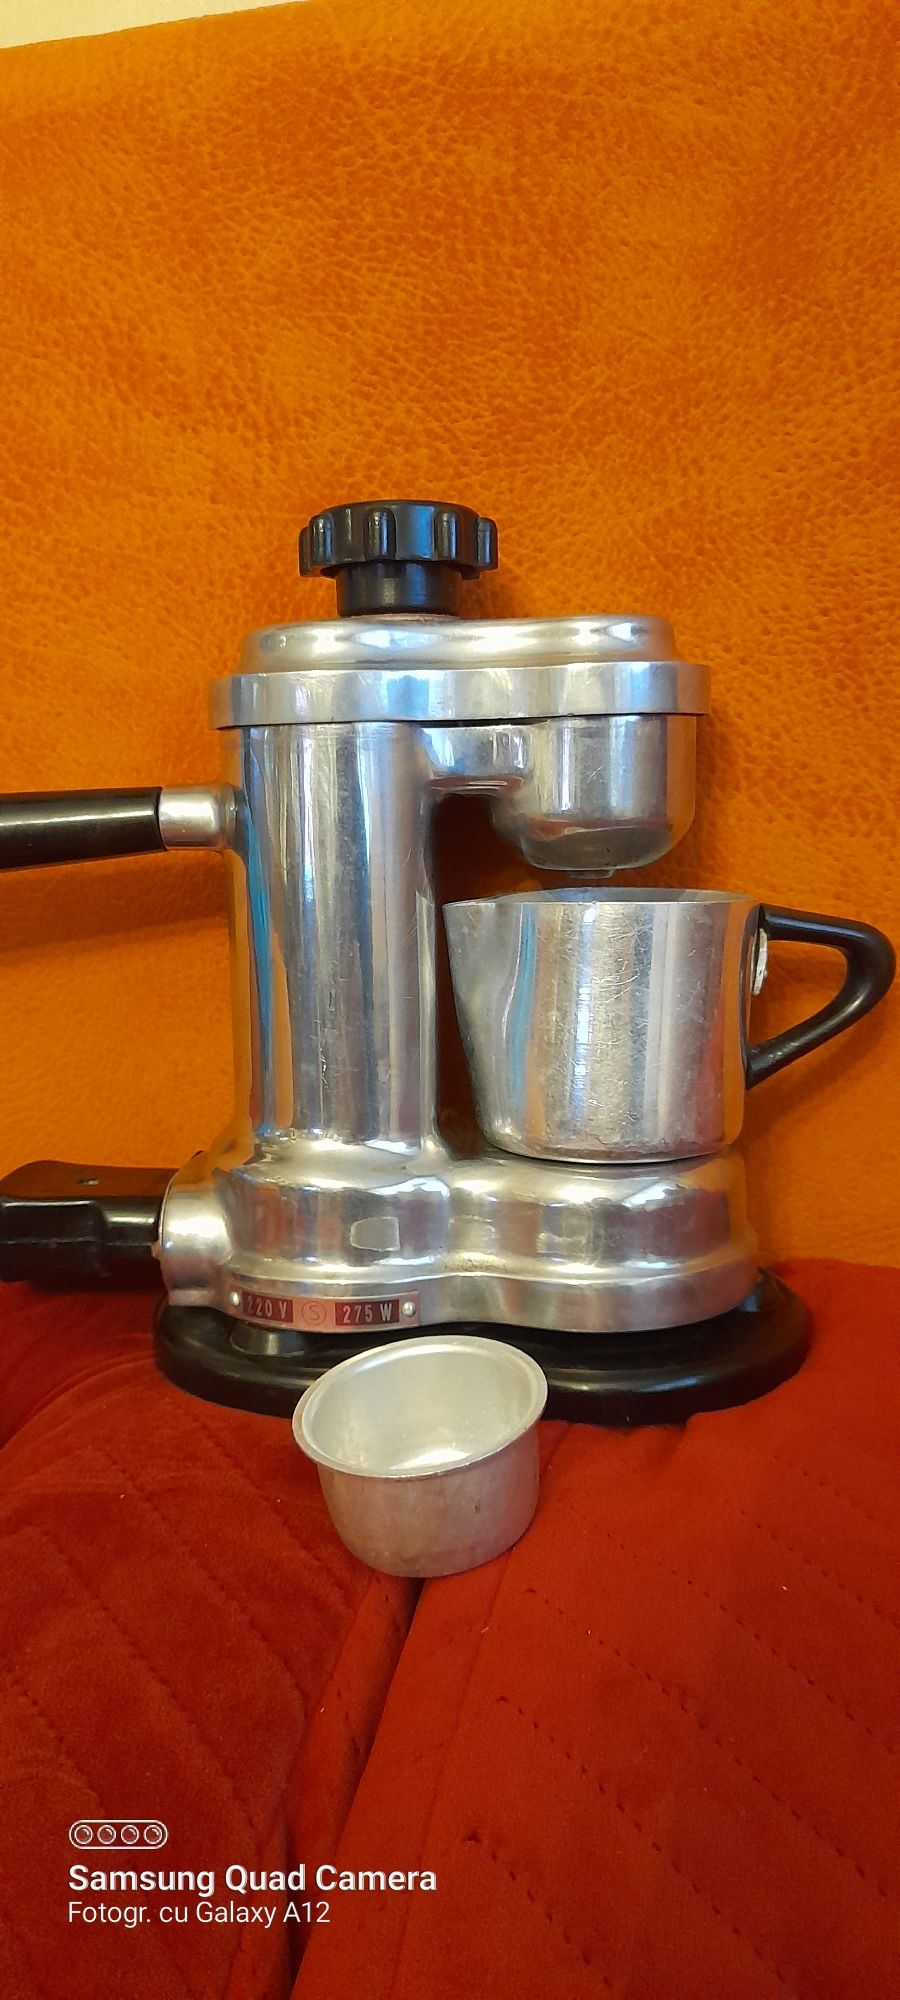 Vechi expresor cafea Stella espresso Viena 1950